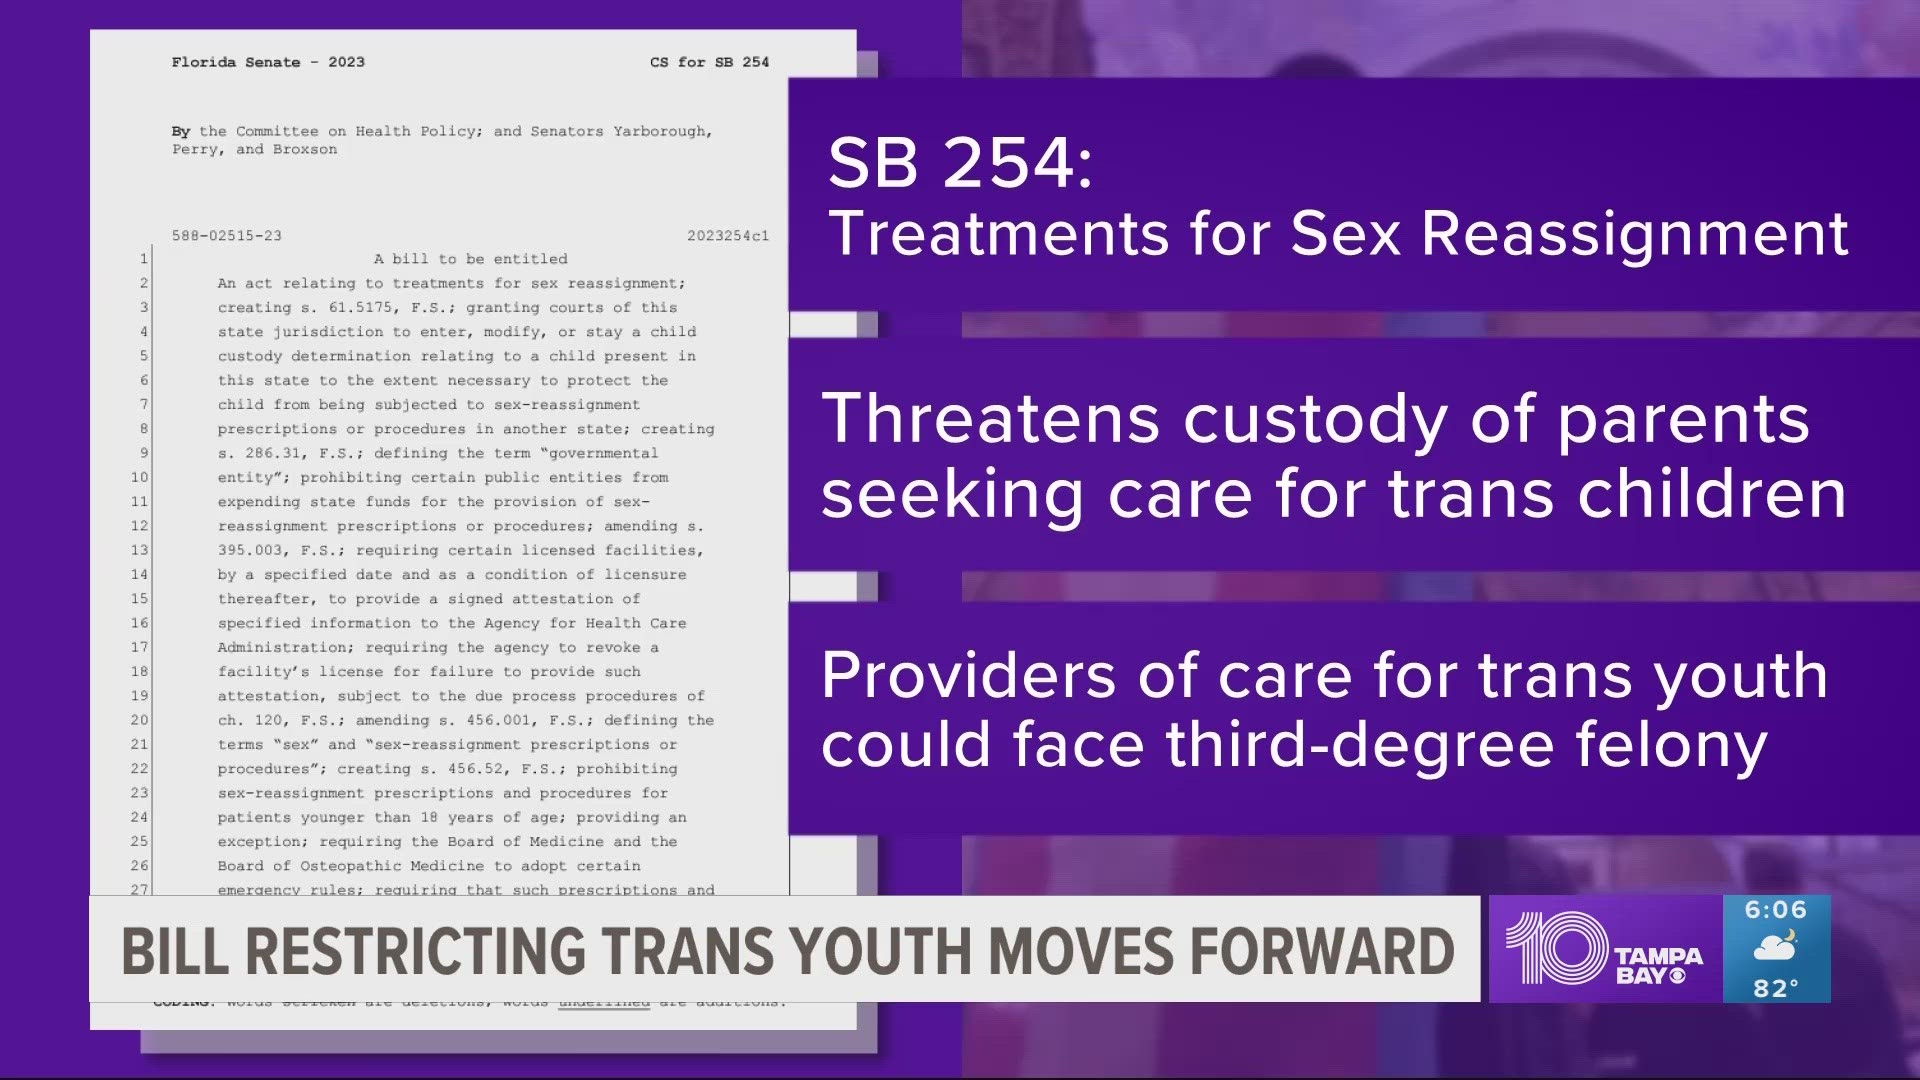 The bill threatens custody of parents seeking care fo trans children.